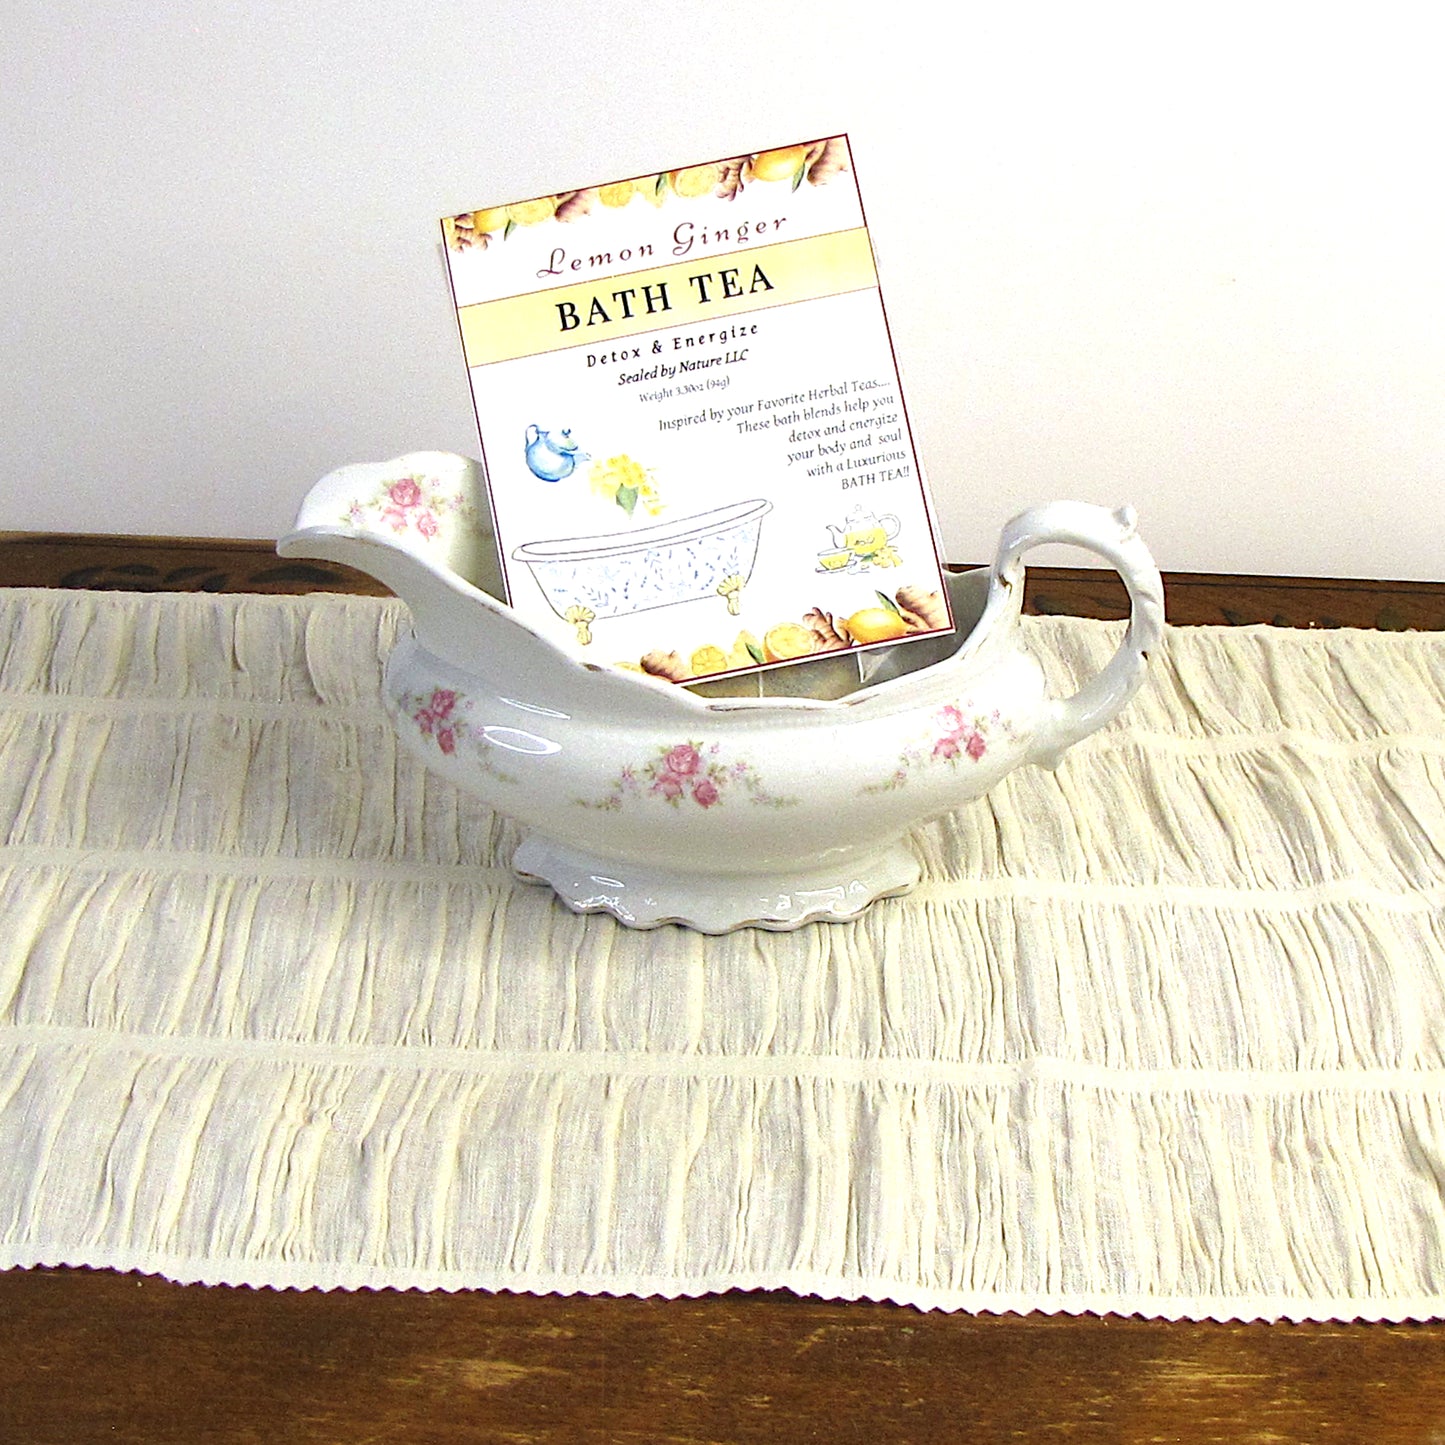 Bath Tea for Spa-like Experience